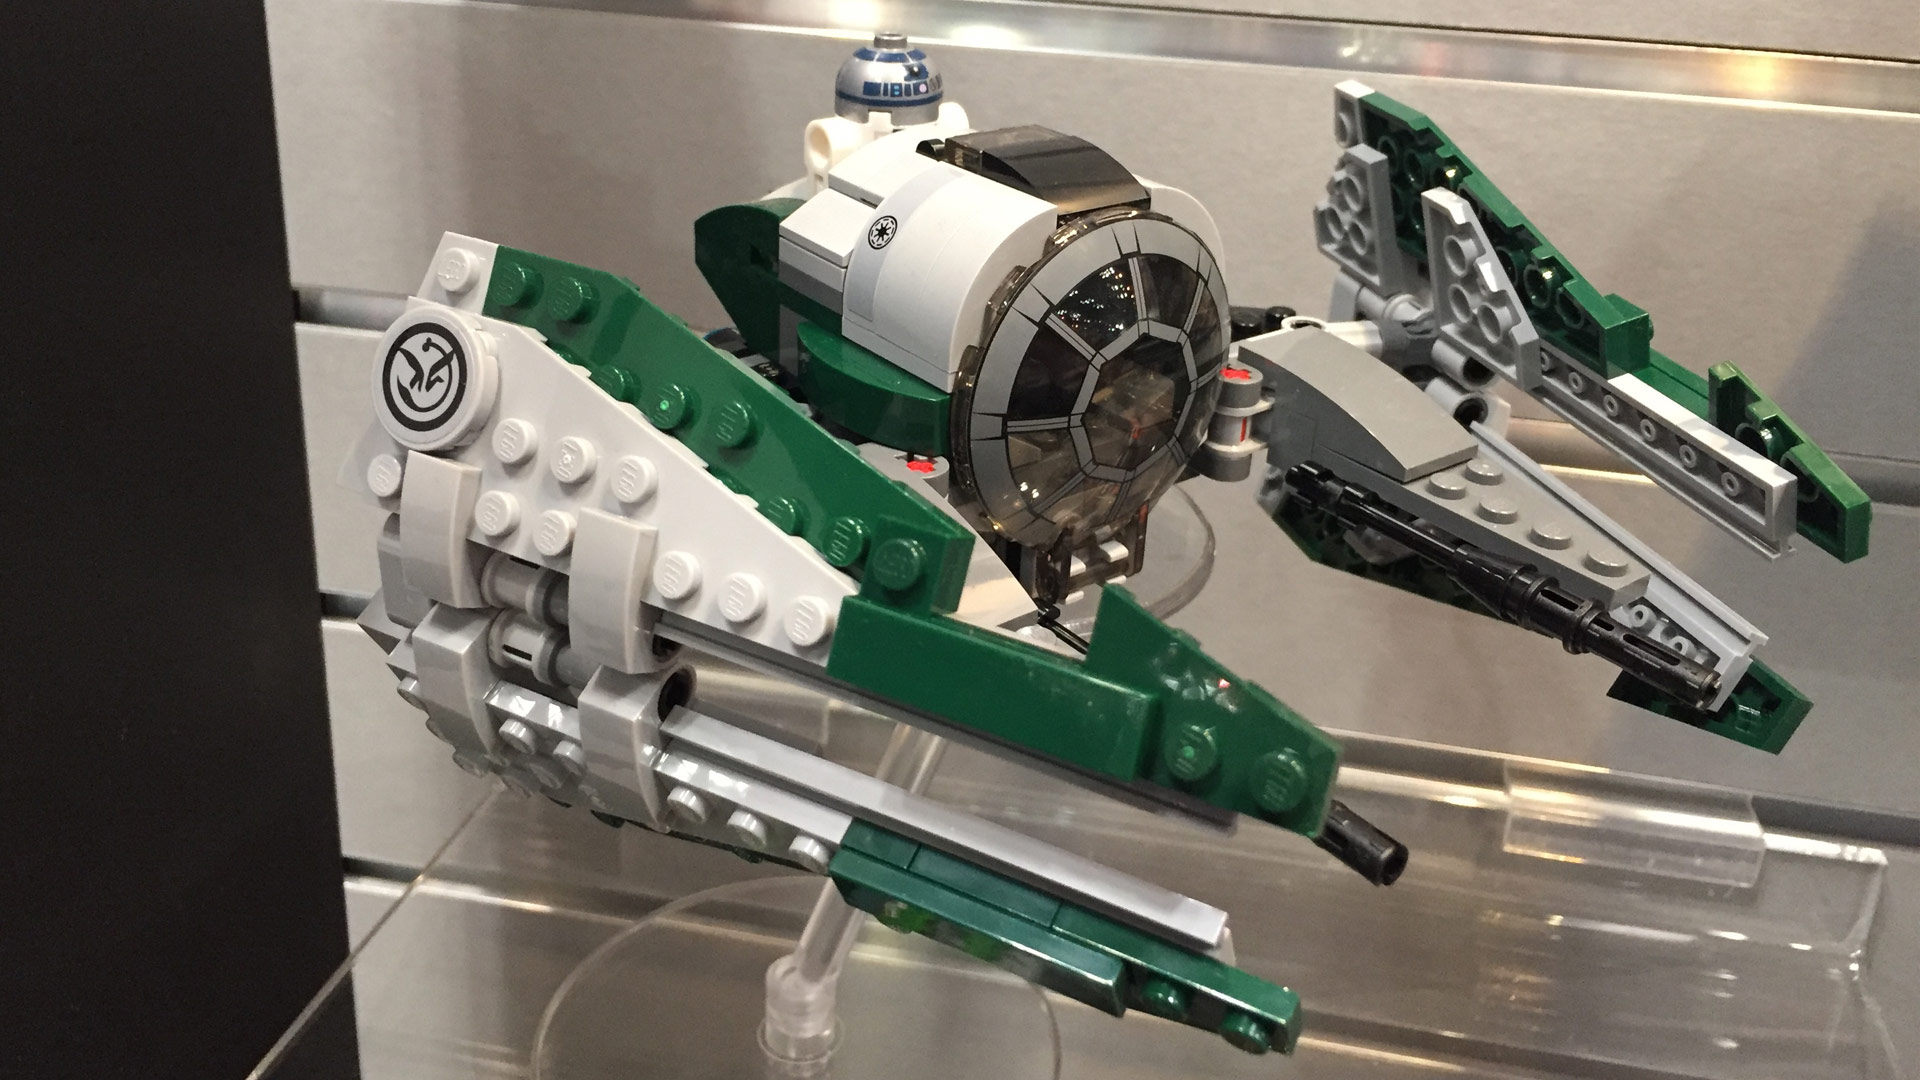 LEGO Star Wars Set 75168 Yoda's Jedi Starfighter at Toy Fair 2017